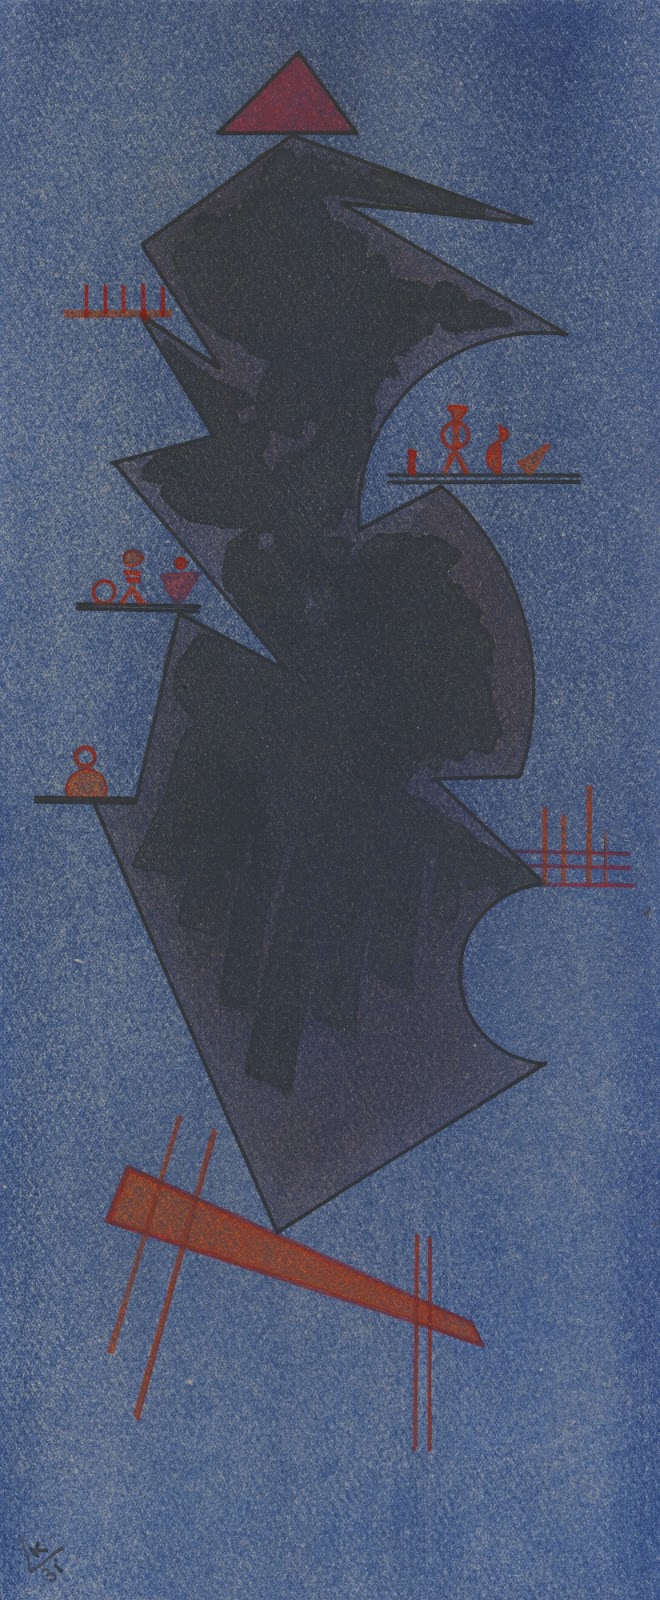 Wassily+Kandinsky-1866-1944 (148).jpg